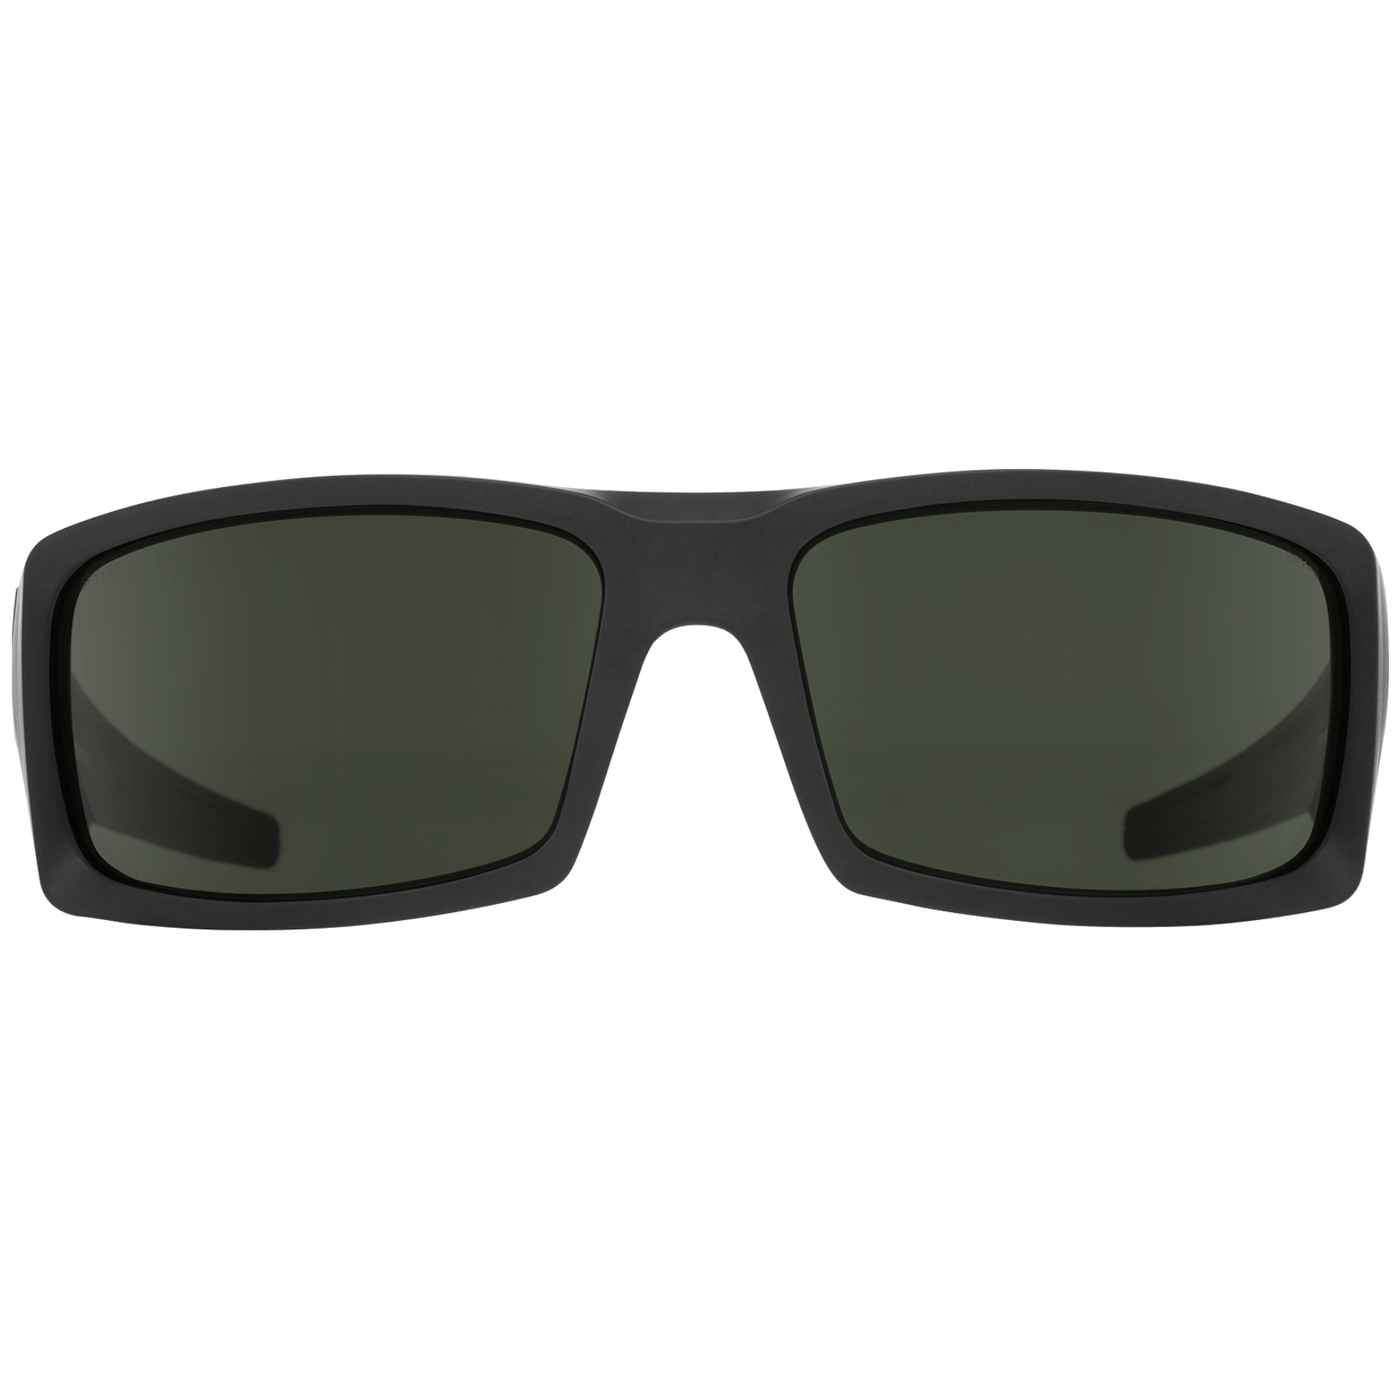 wraparound sunglasses for men